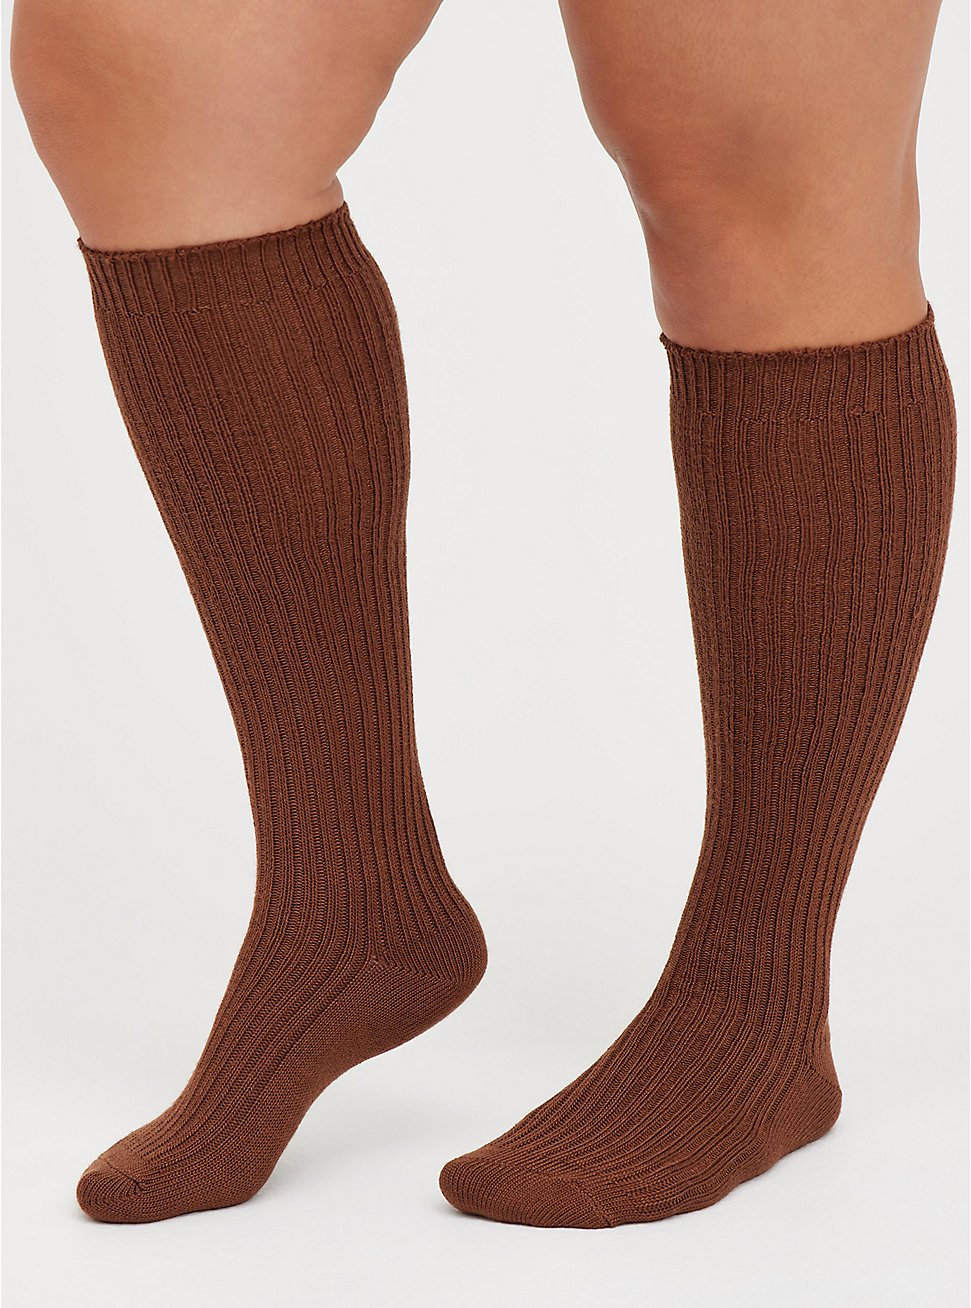 Knee-High Socks - Butter Soft Brown , MULTI, hi-res